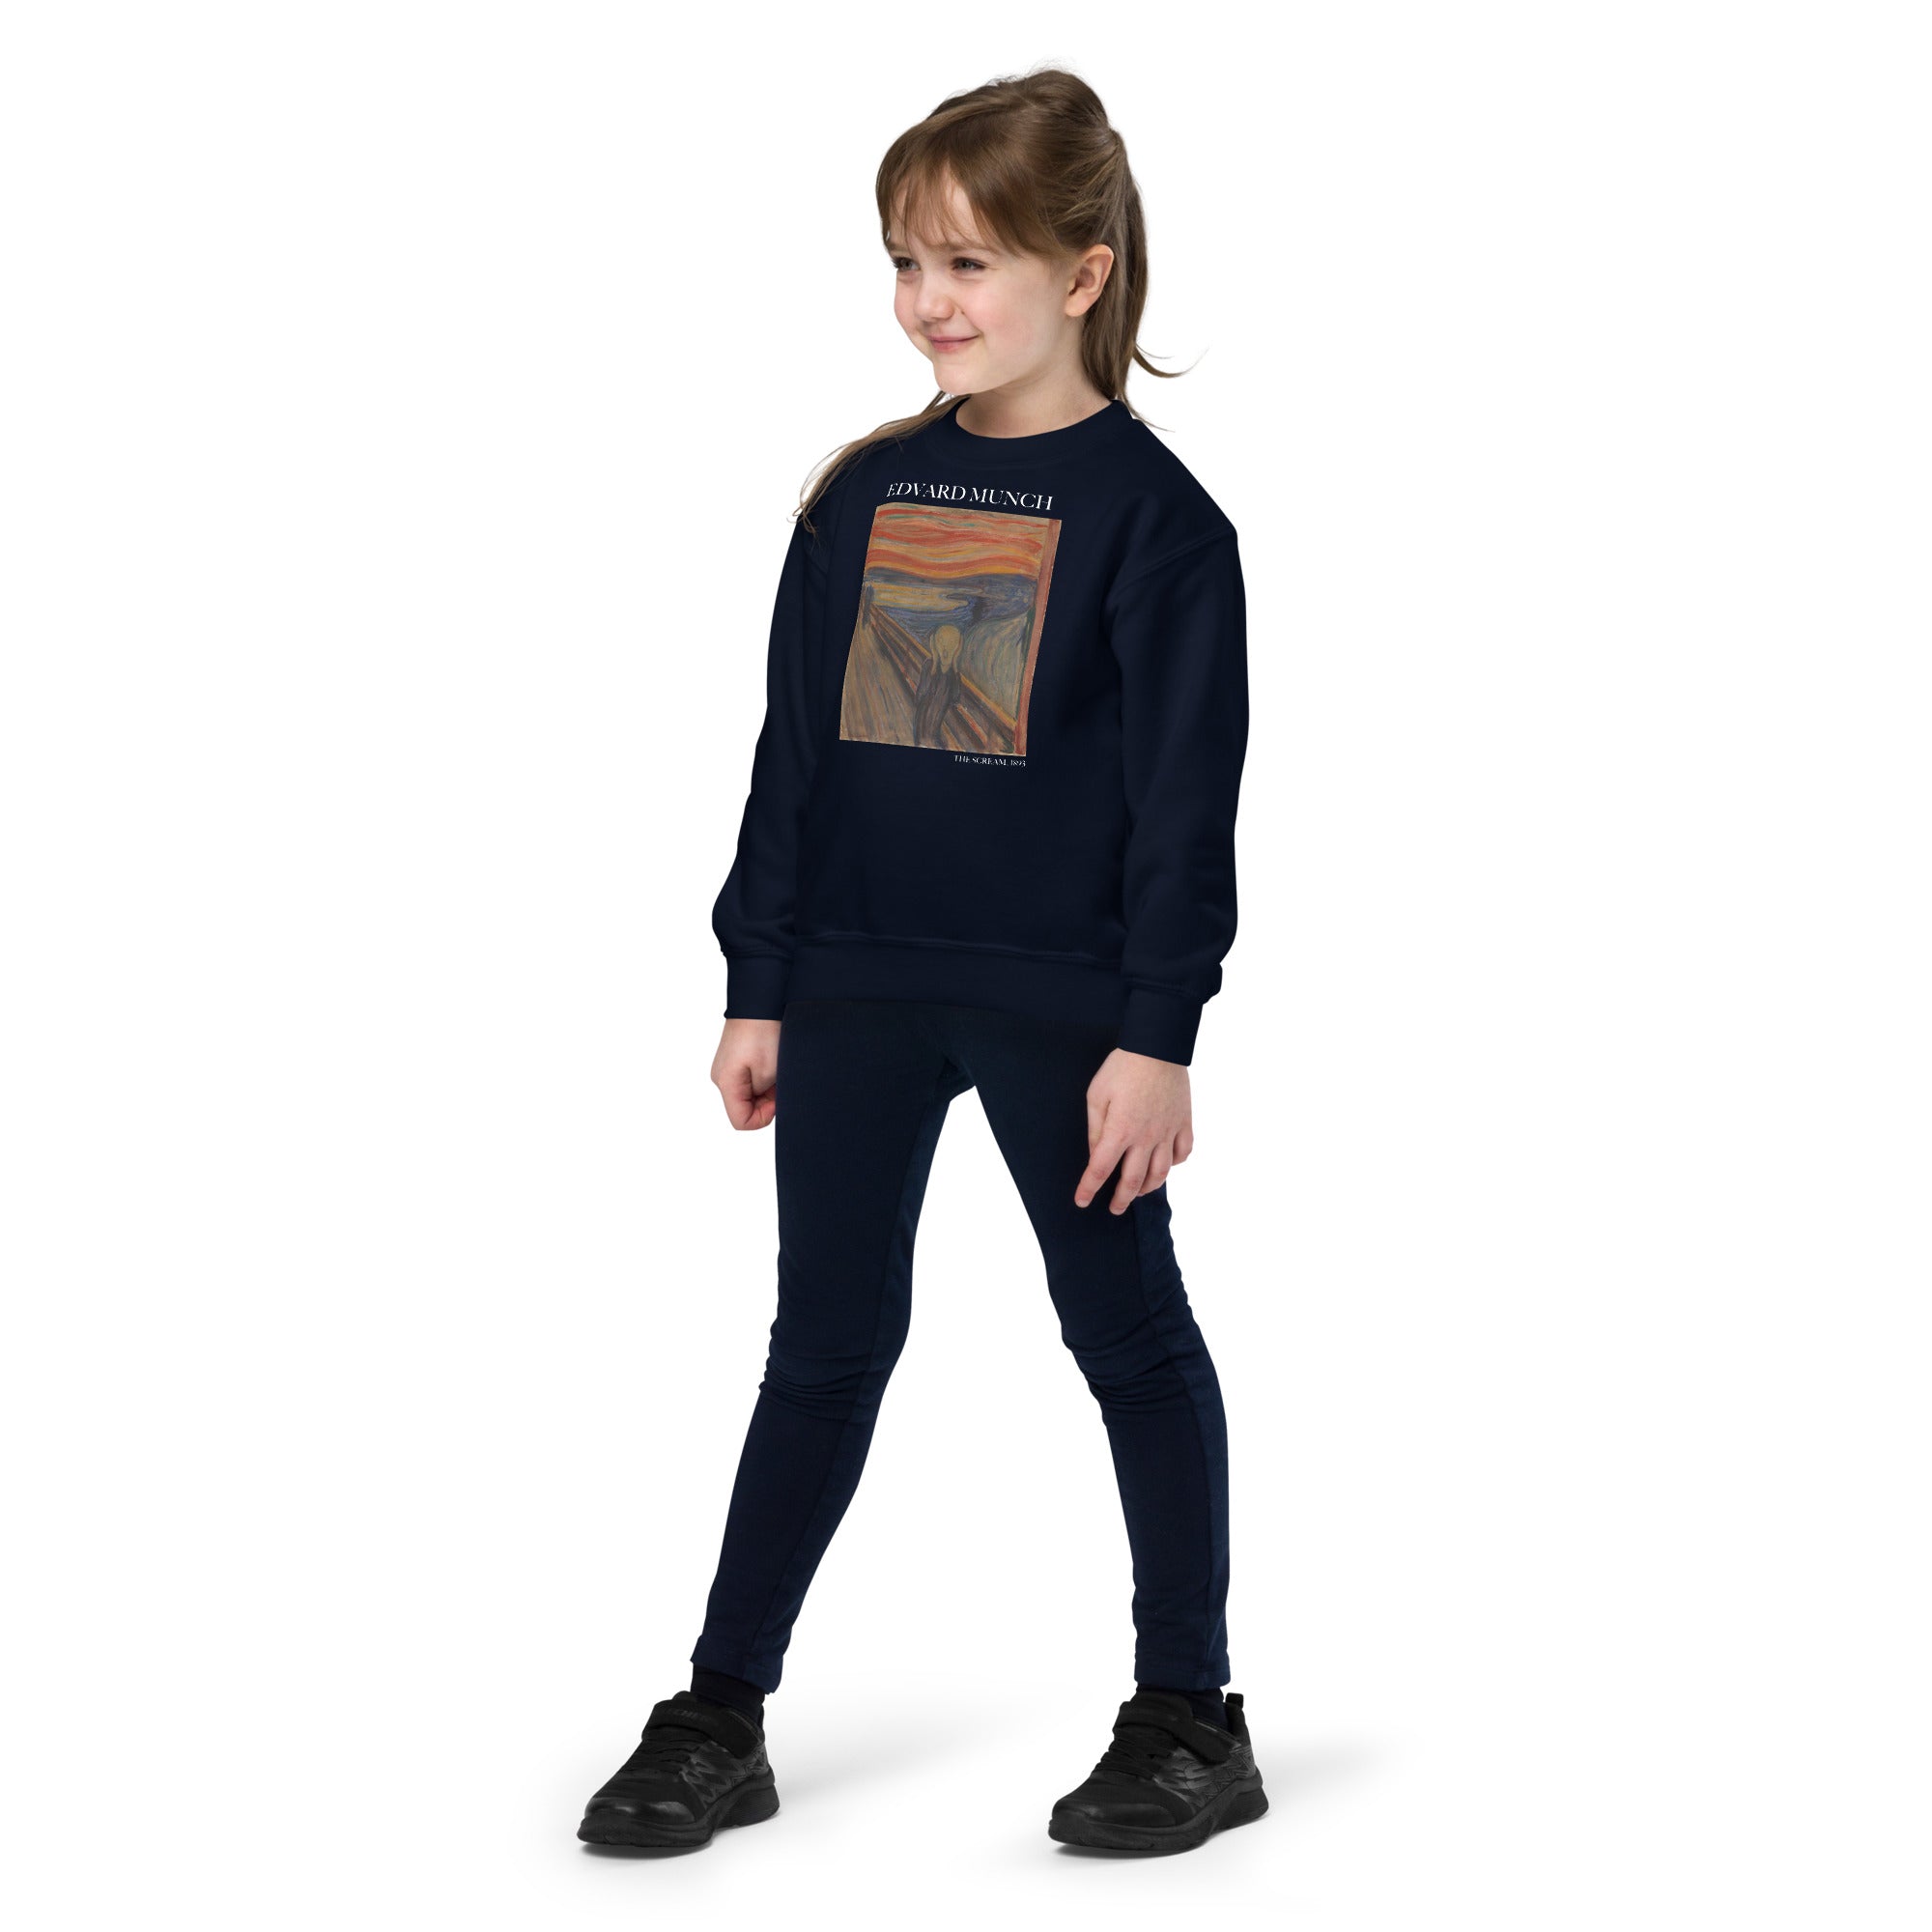 Edvard Munch 'The Scream' Famous Painting Crewneck Sweatshirt | Premium Youth Art Sweatshirt